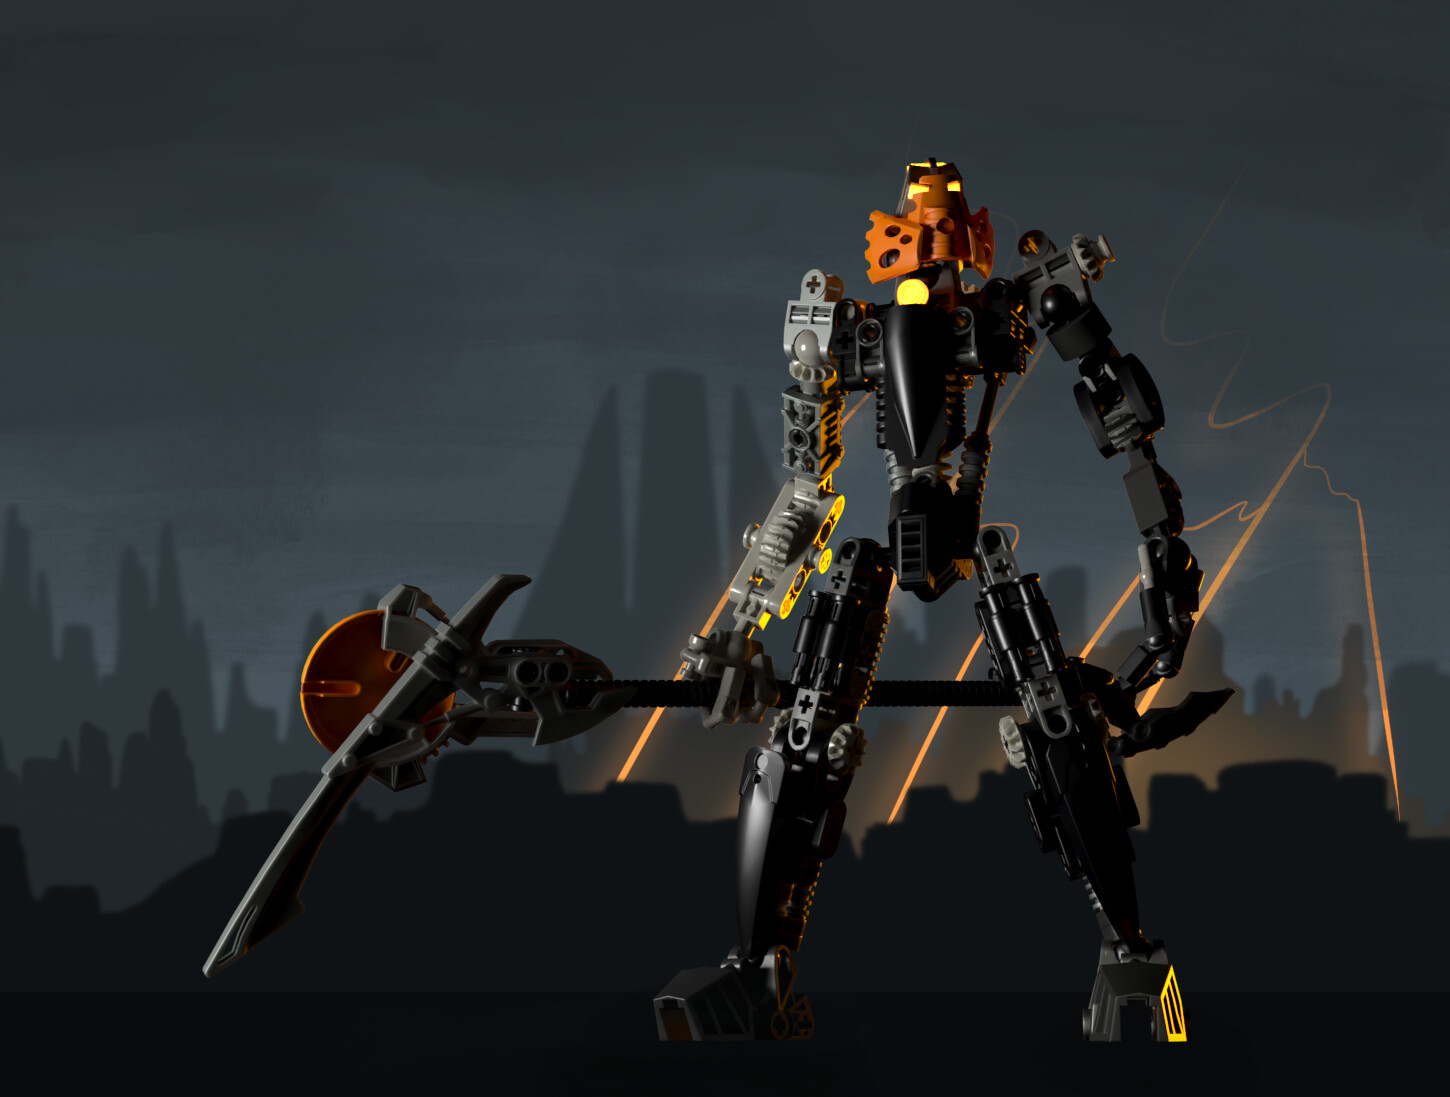 Bionicle-JoJo Poses - Artwork - The TTV Message Boards